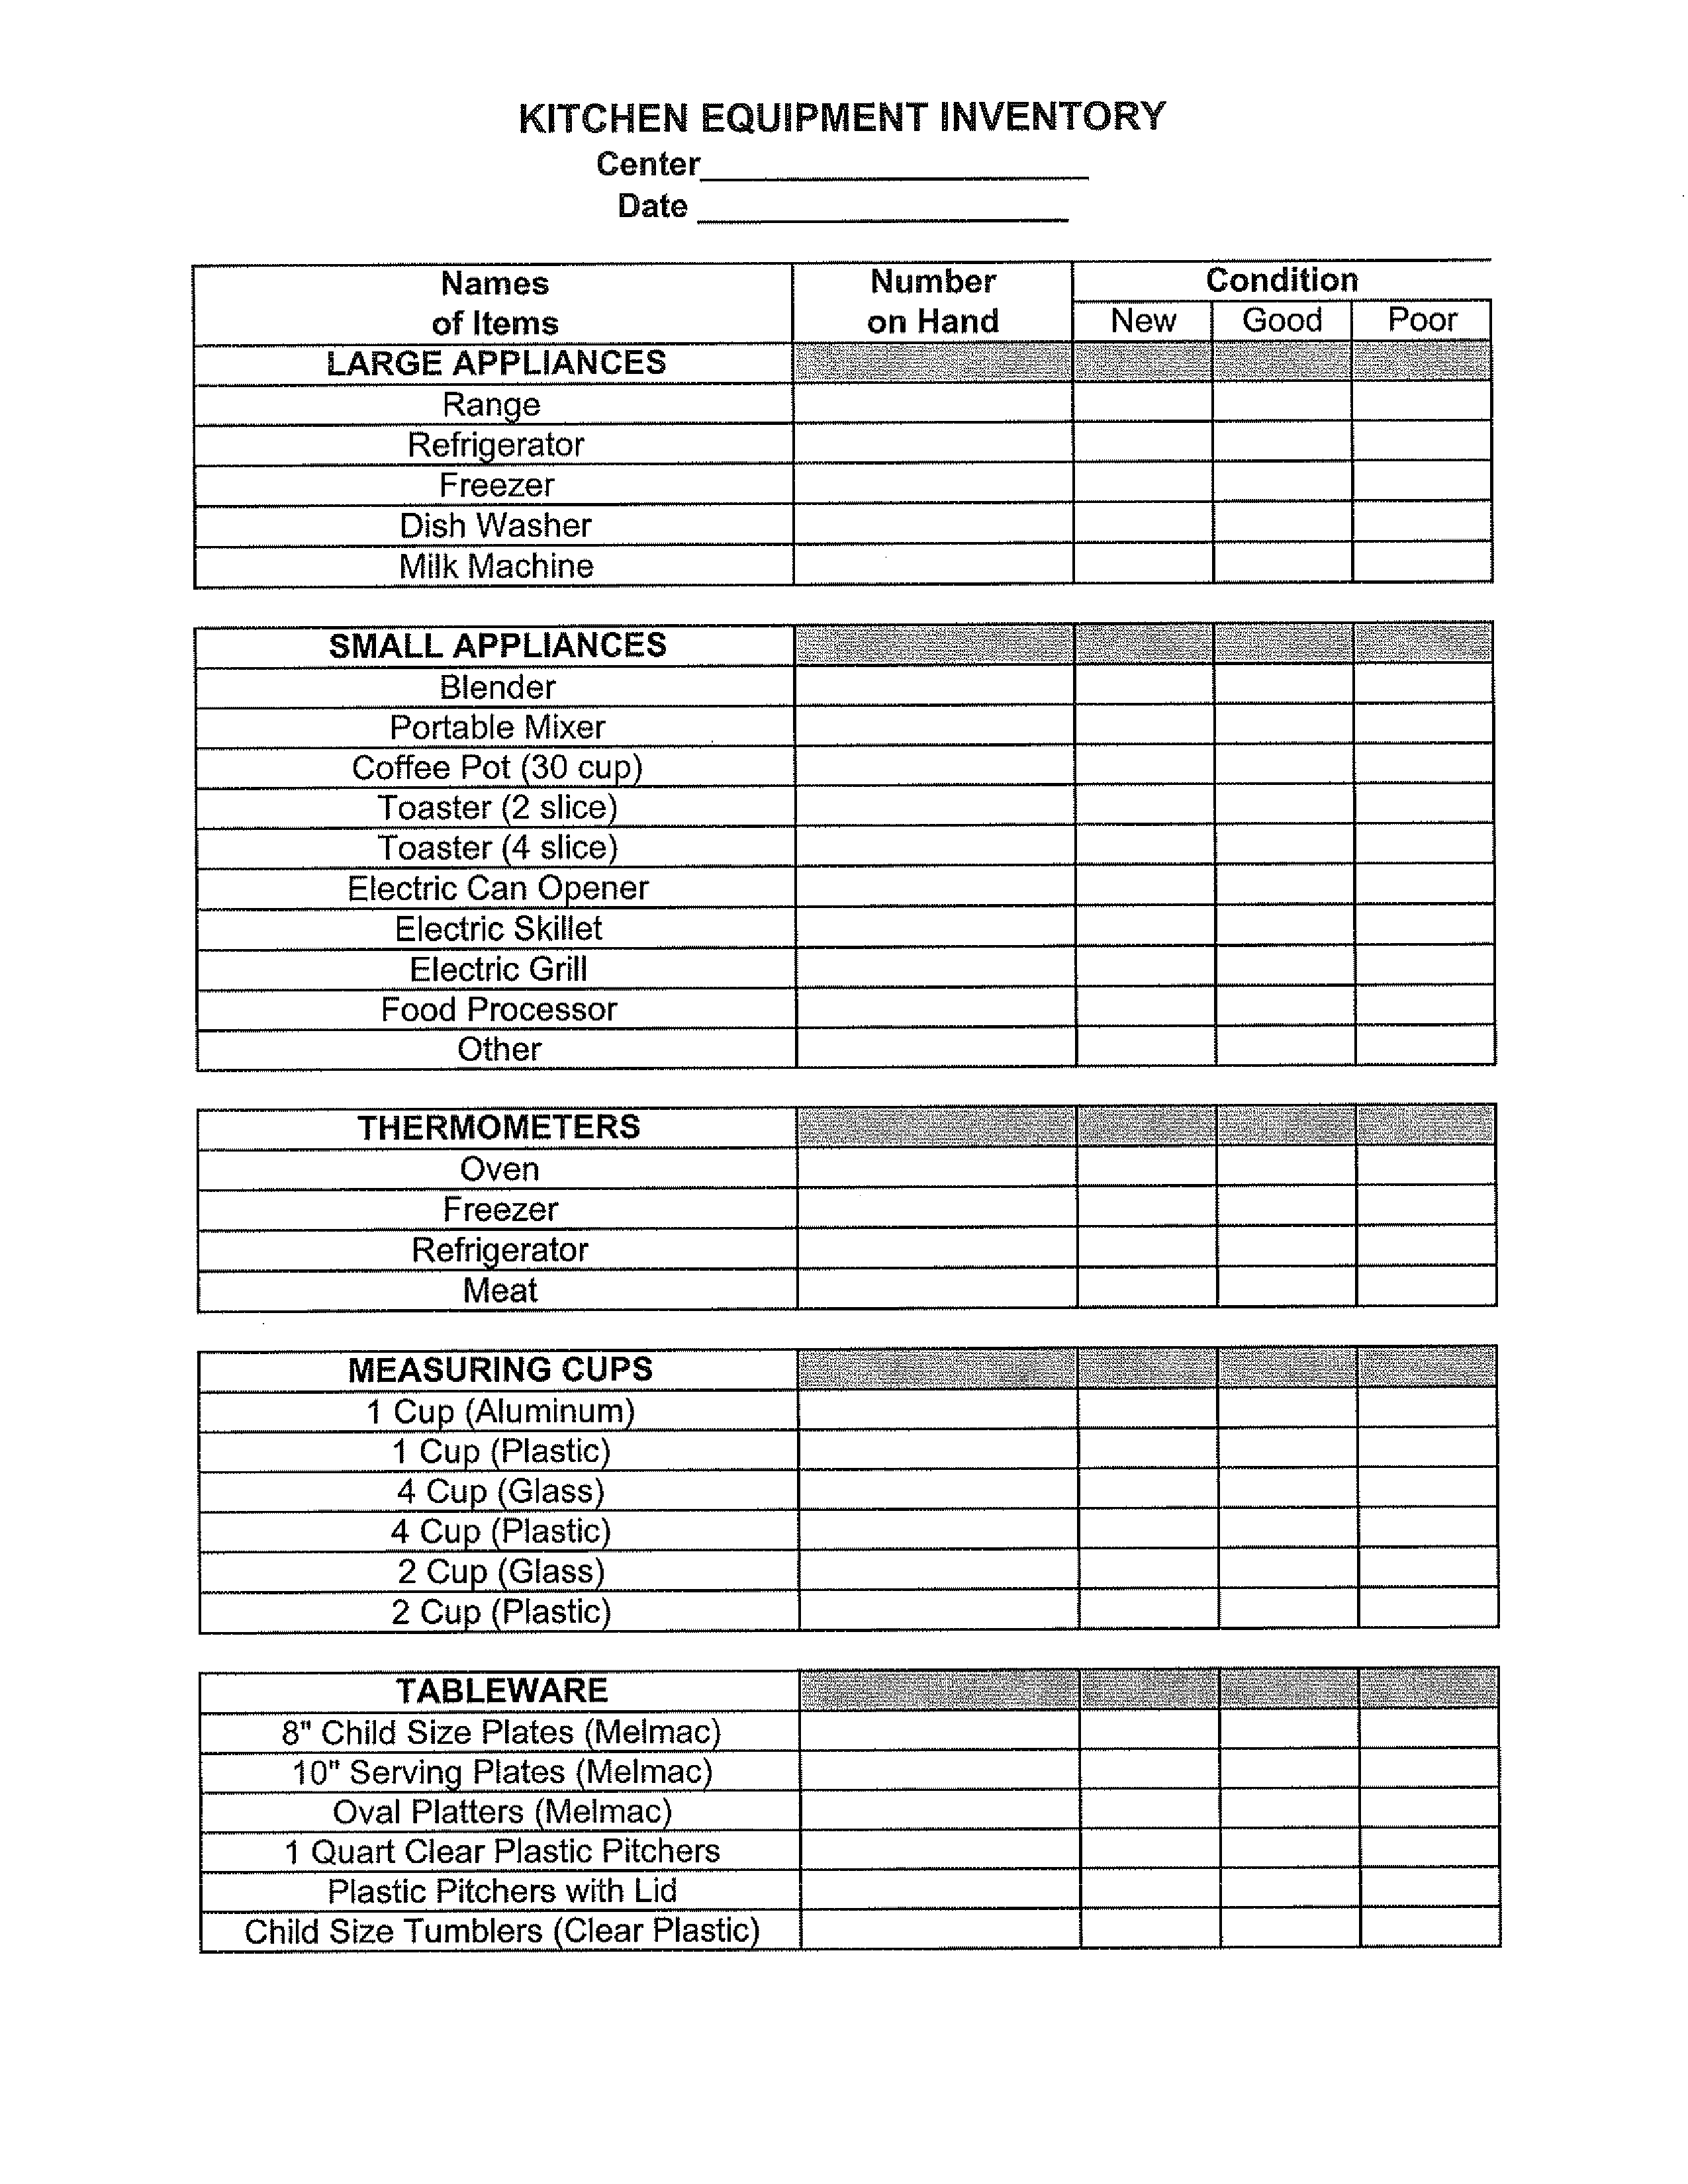 inventory list for restaurant